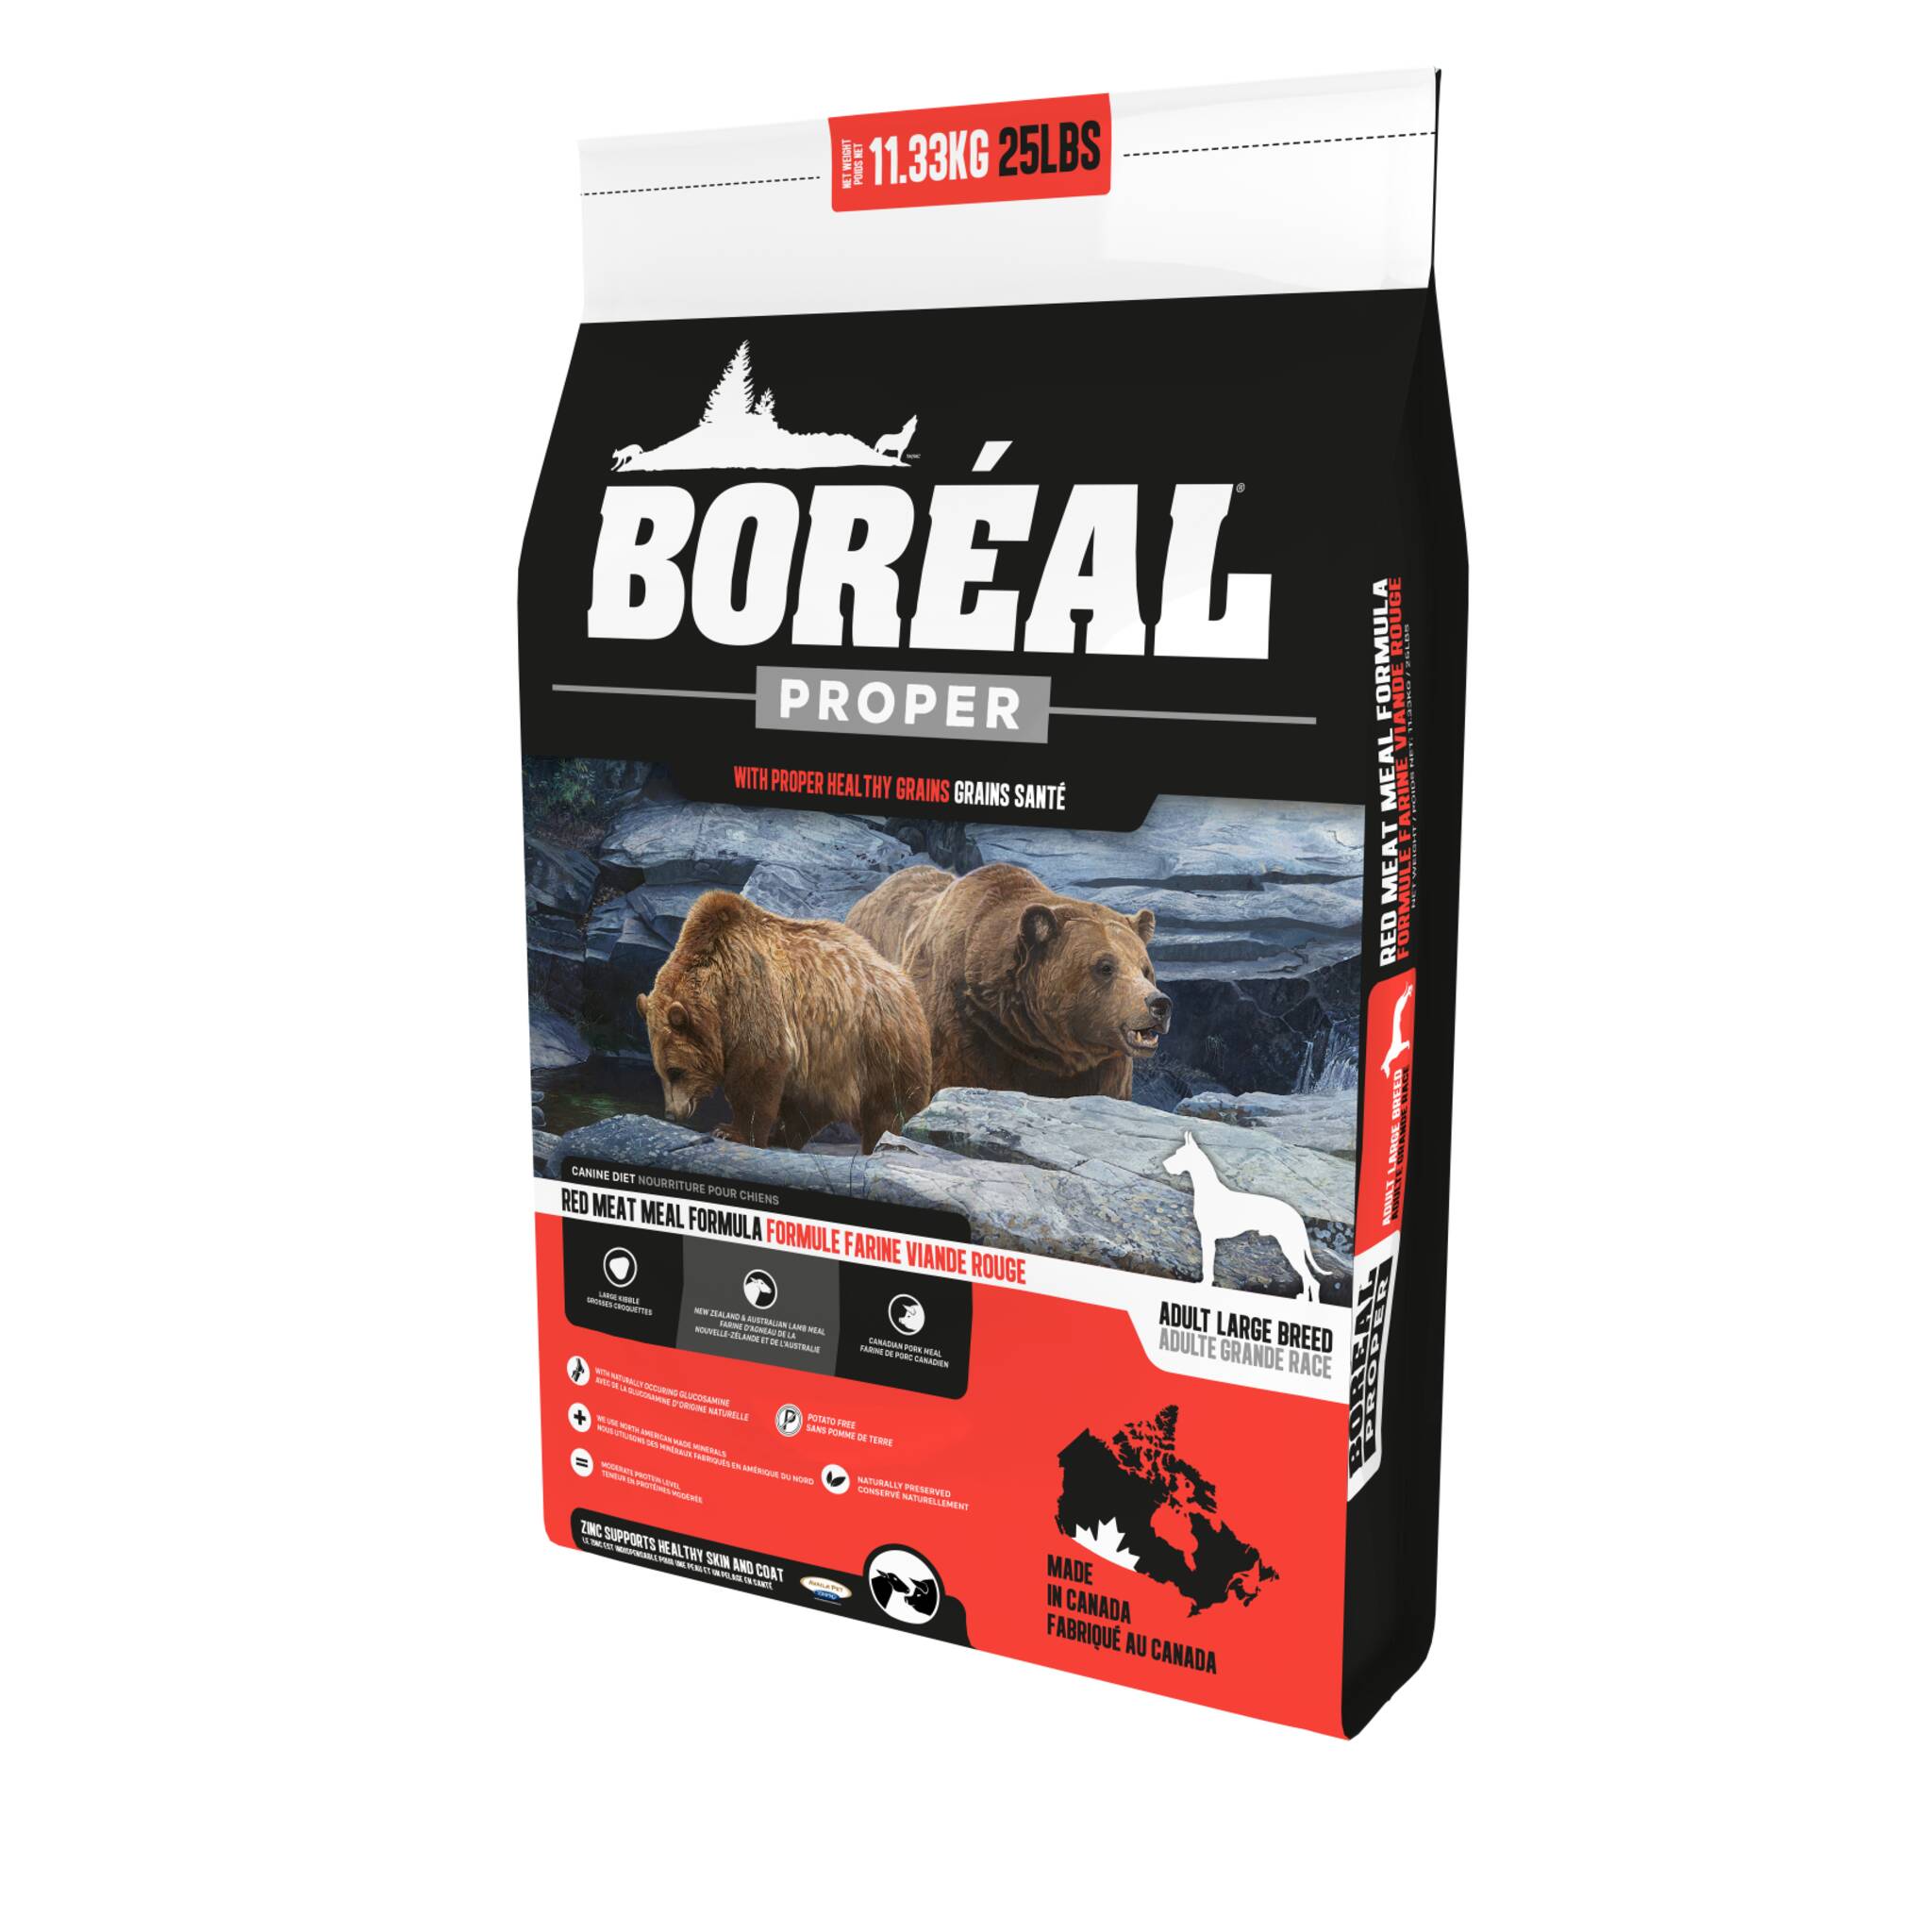 Boreal dry dog food, Proper blend, red meat recipe, adult large breed formula, 25 lb.